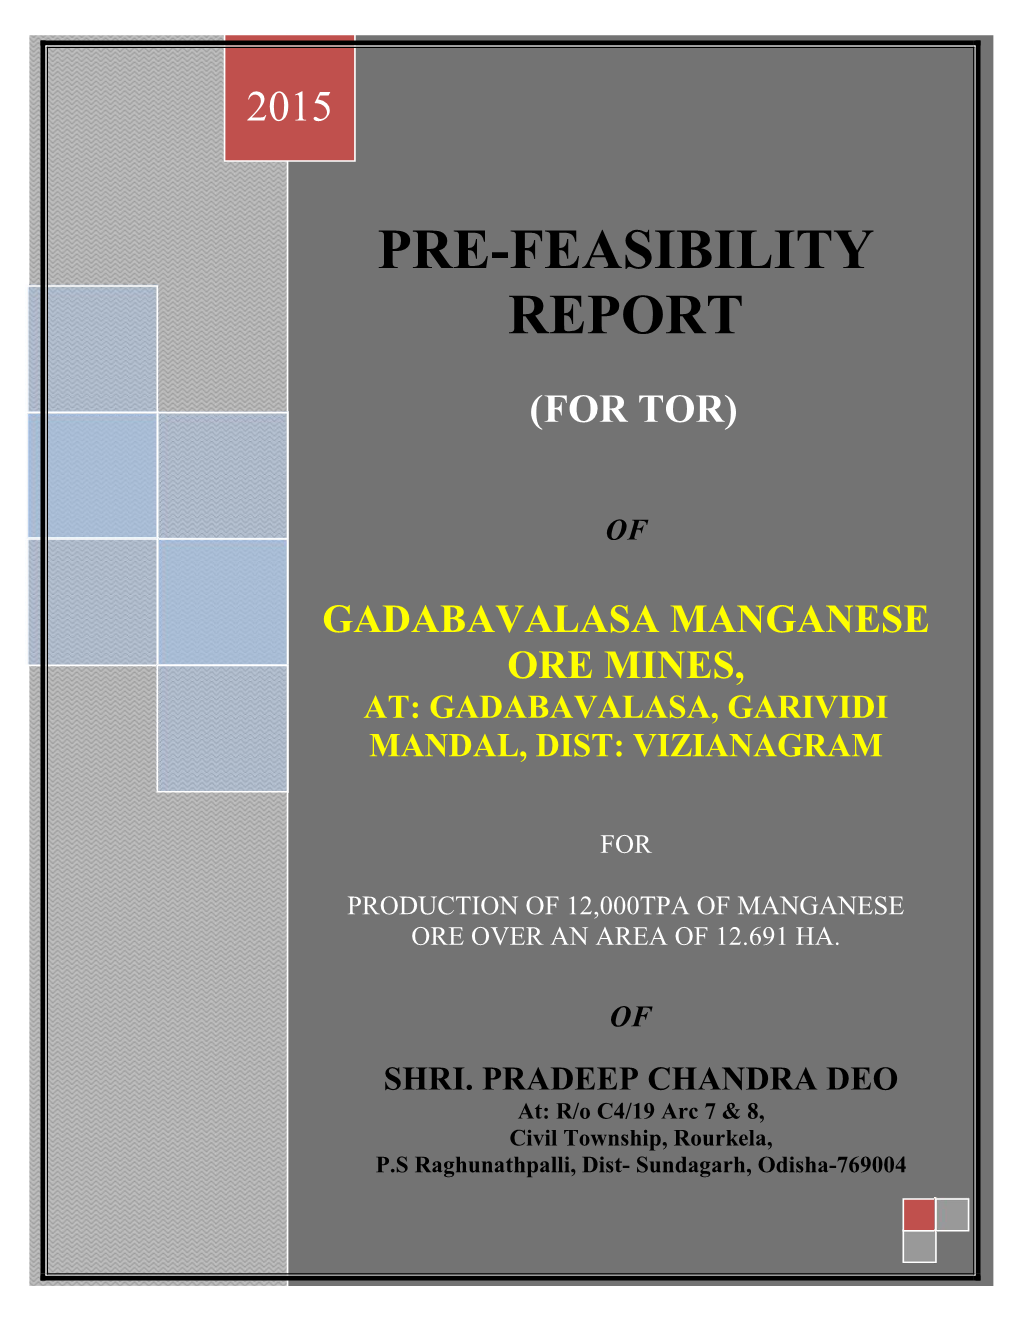 Pre-Feasibility Report of Gadabavalasa